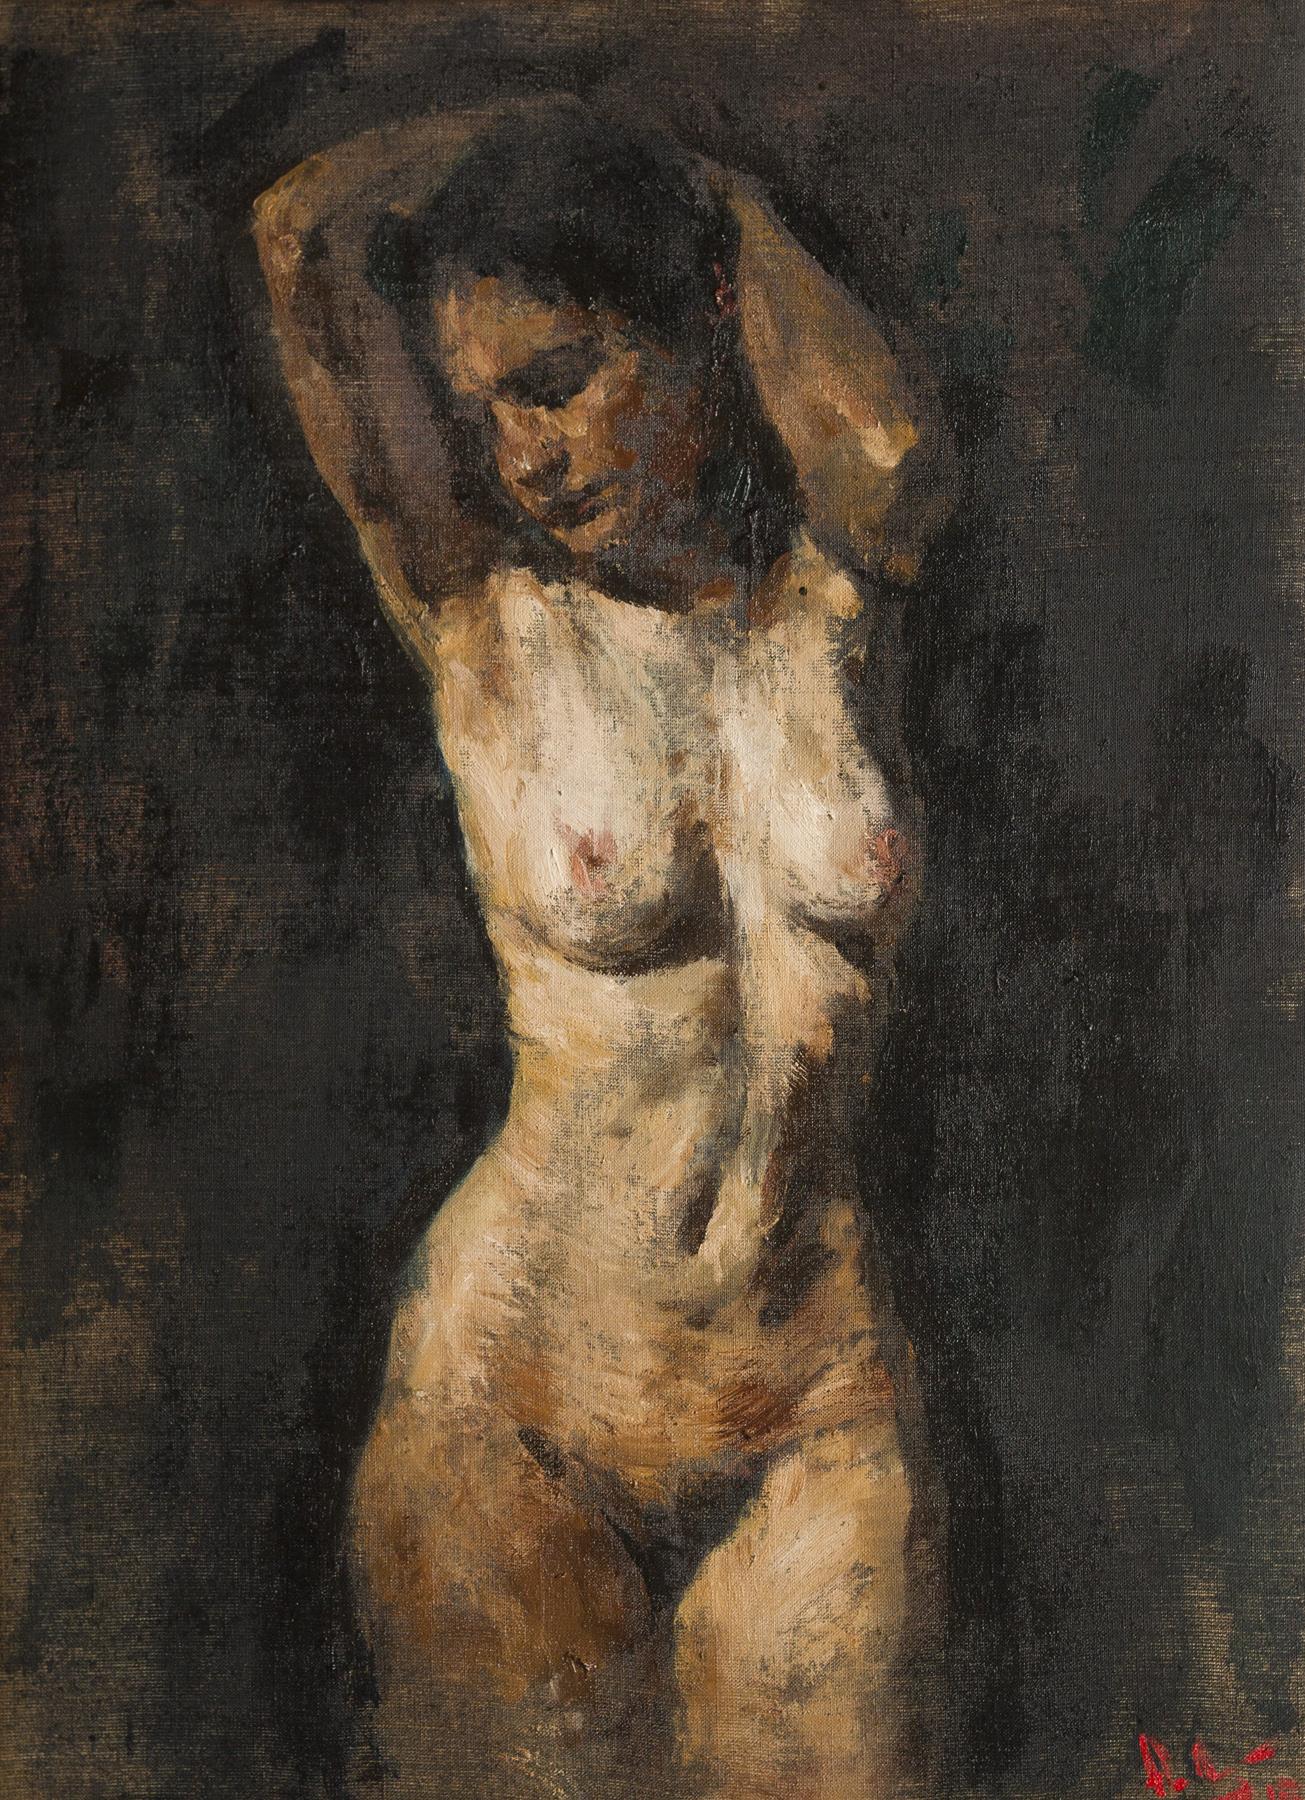 裸体. Original modern art painting